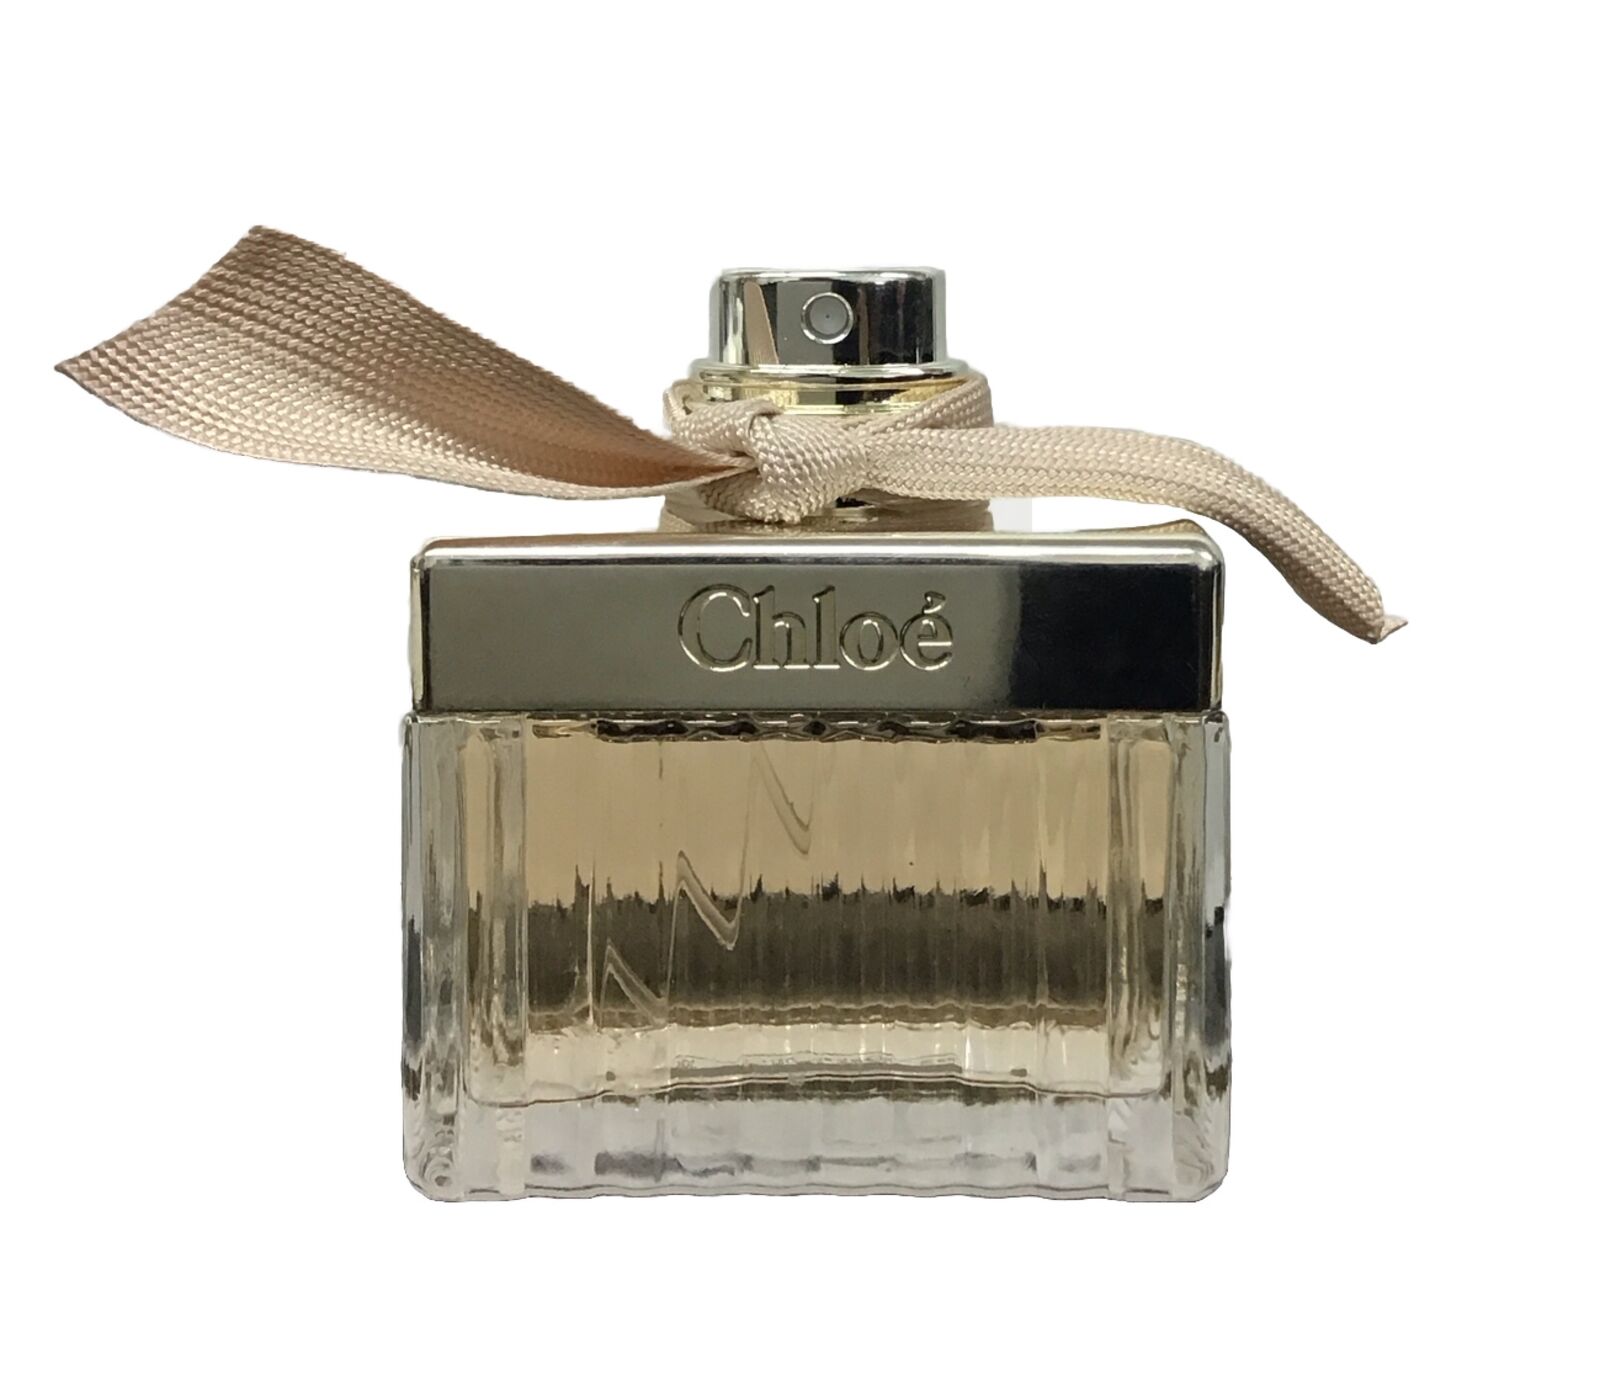 Chloe Eau De Parfum Spray For Women 1.6 Fl Oz, As Pictured, No Box Or Cap.